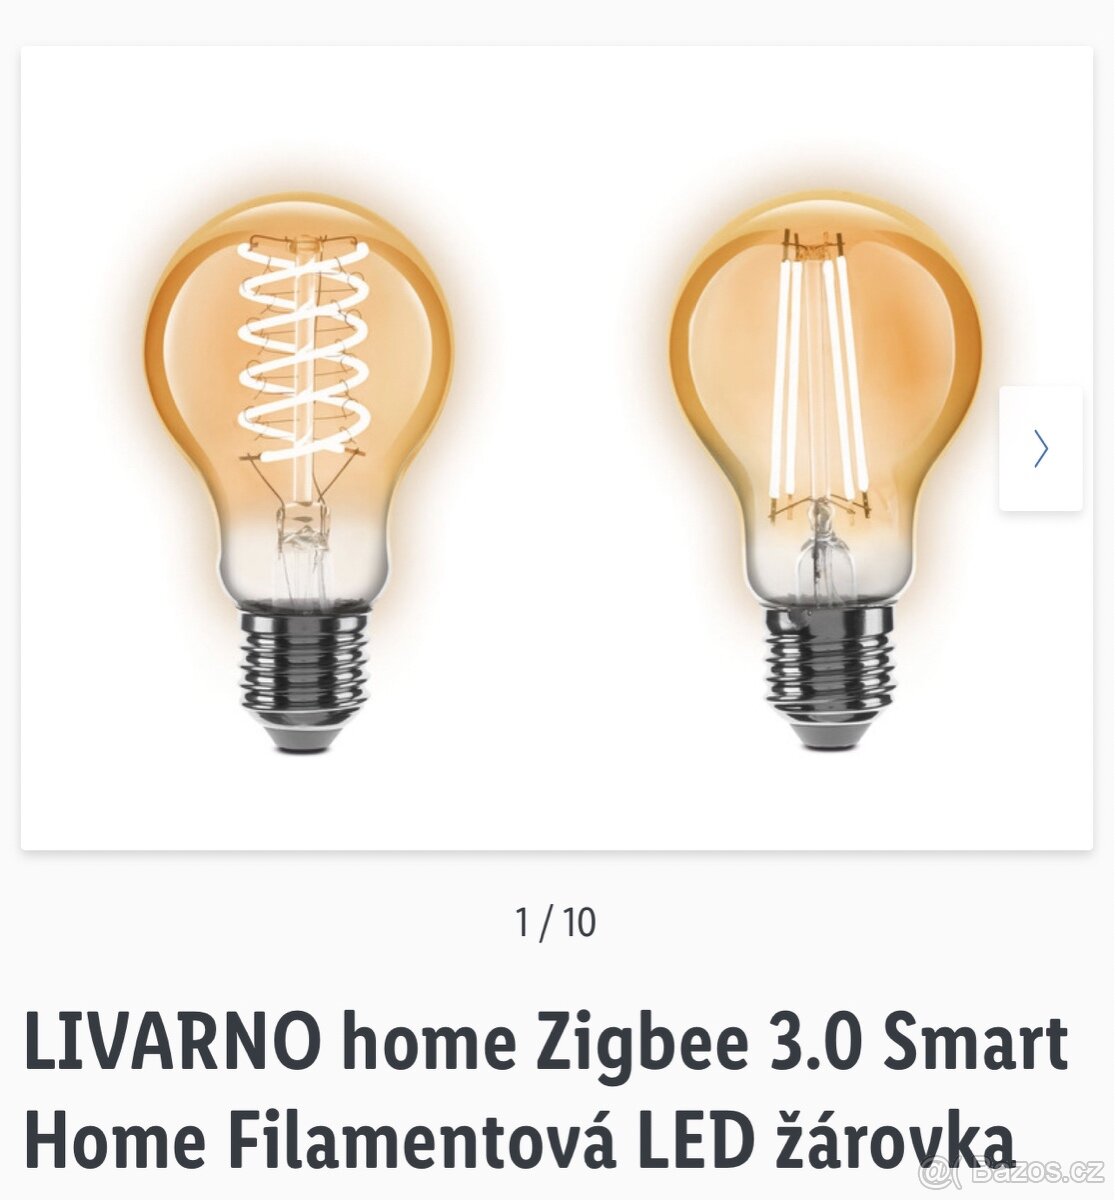 LIVARNO home Zigbee 3.0 Smart Home Filamentová LED žárovka